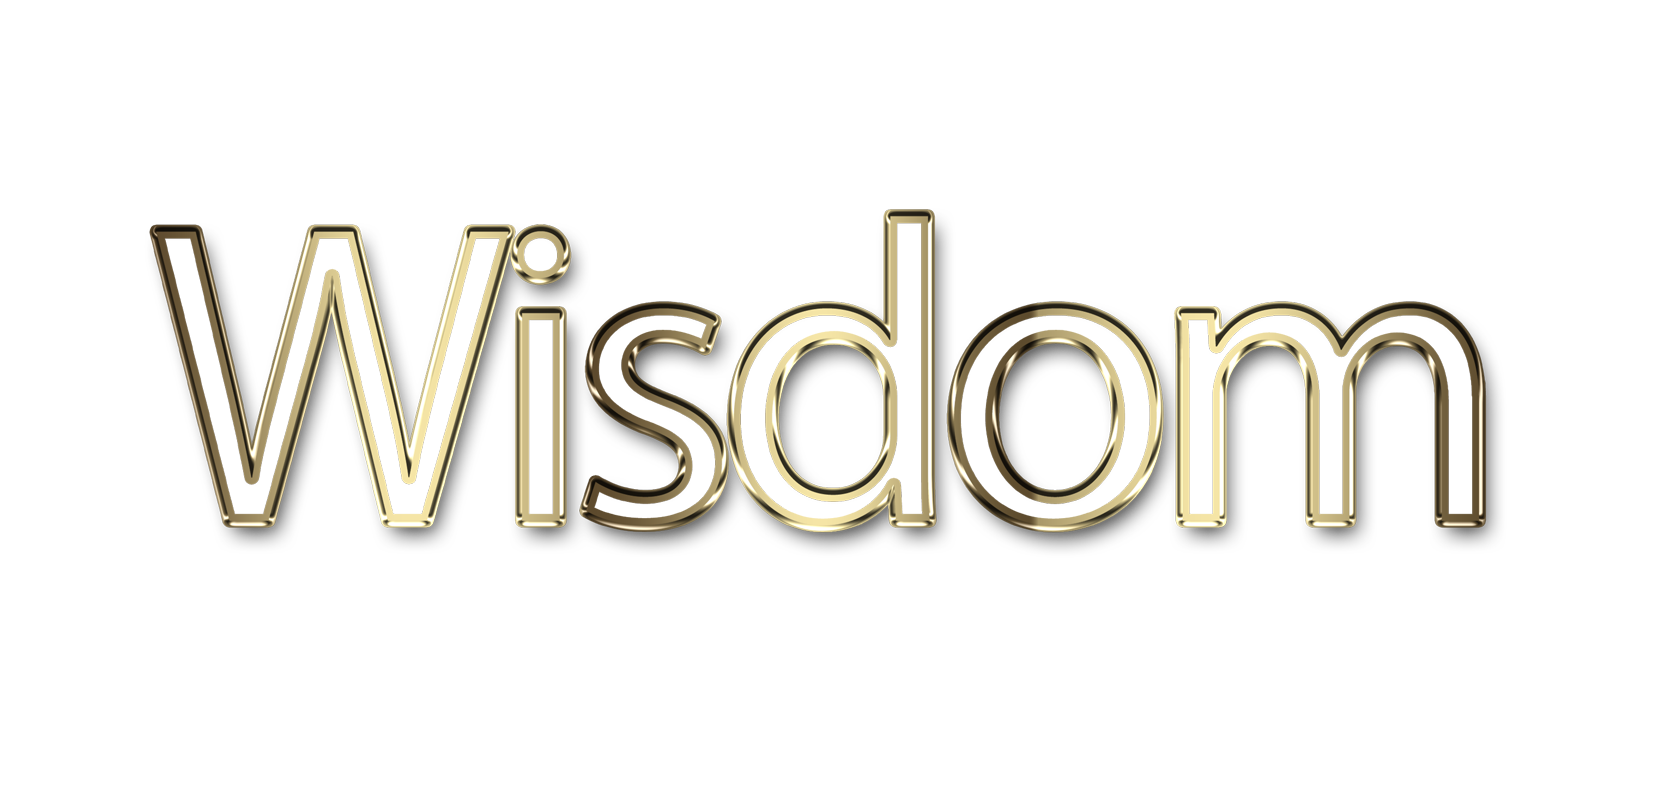 Wisdom png, word Wisdom png, Wisdom word png, Wisdom text png, Wisdom letters png, Wisdom word art typography PNG images, transparent png